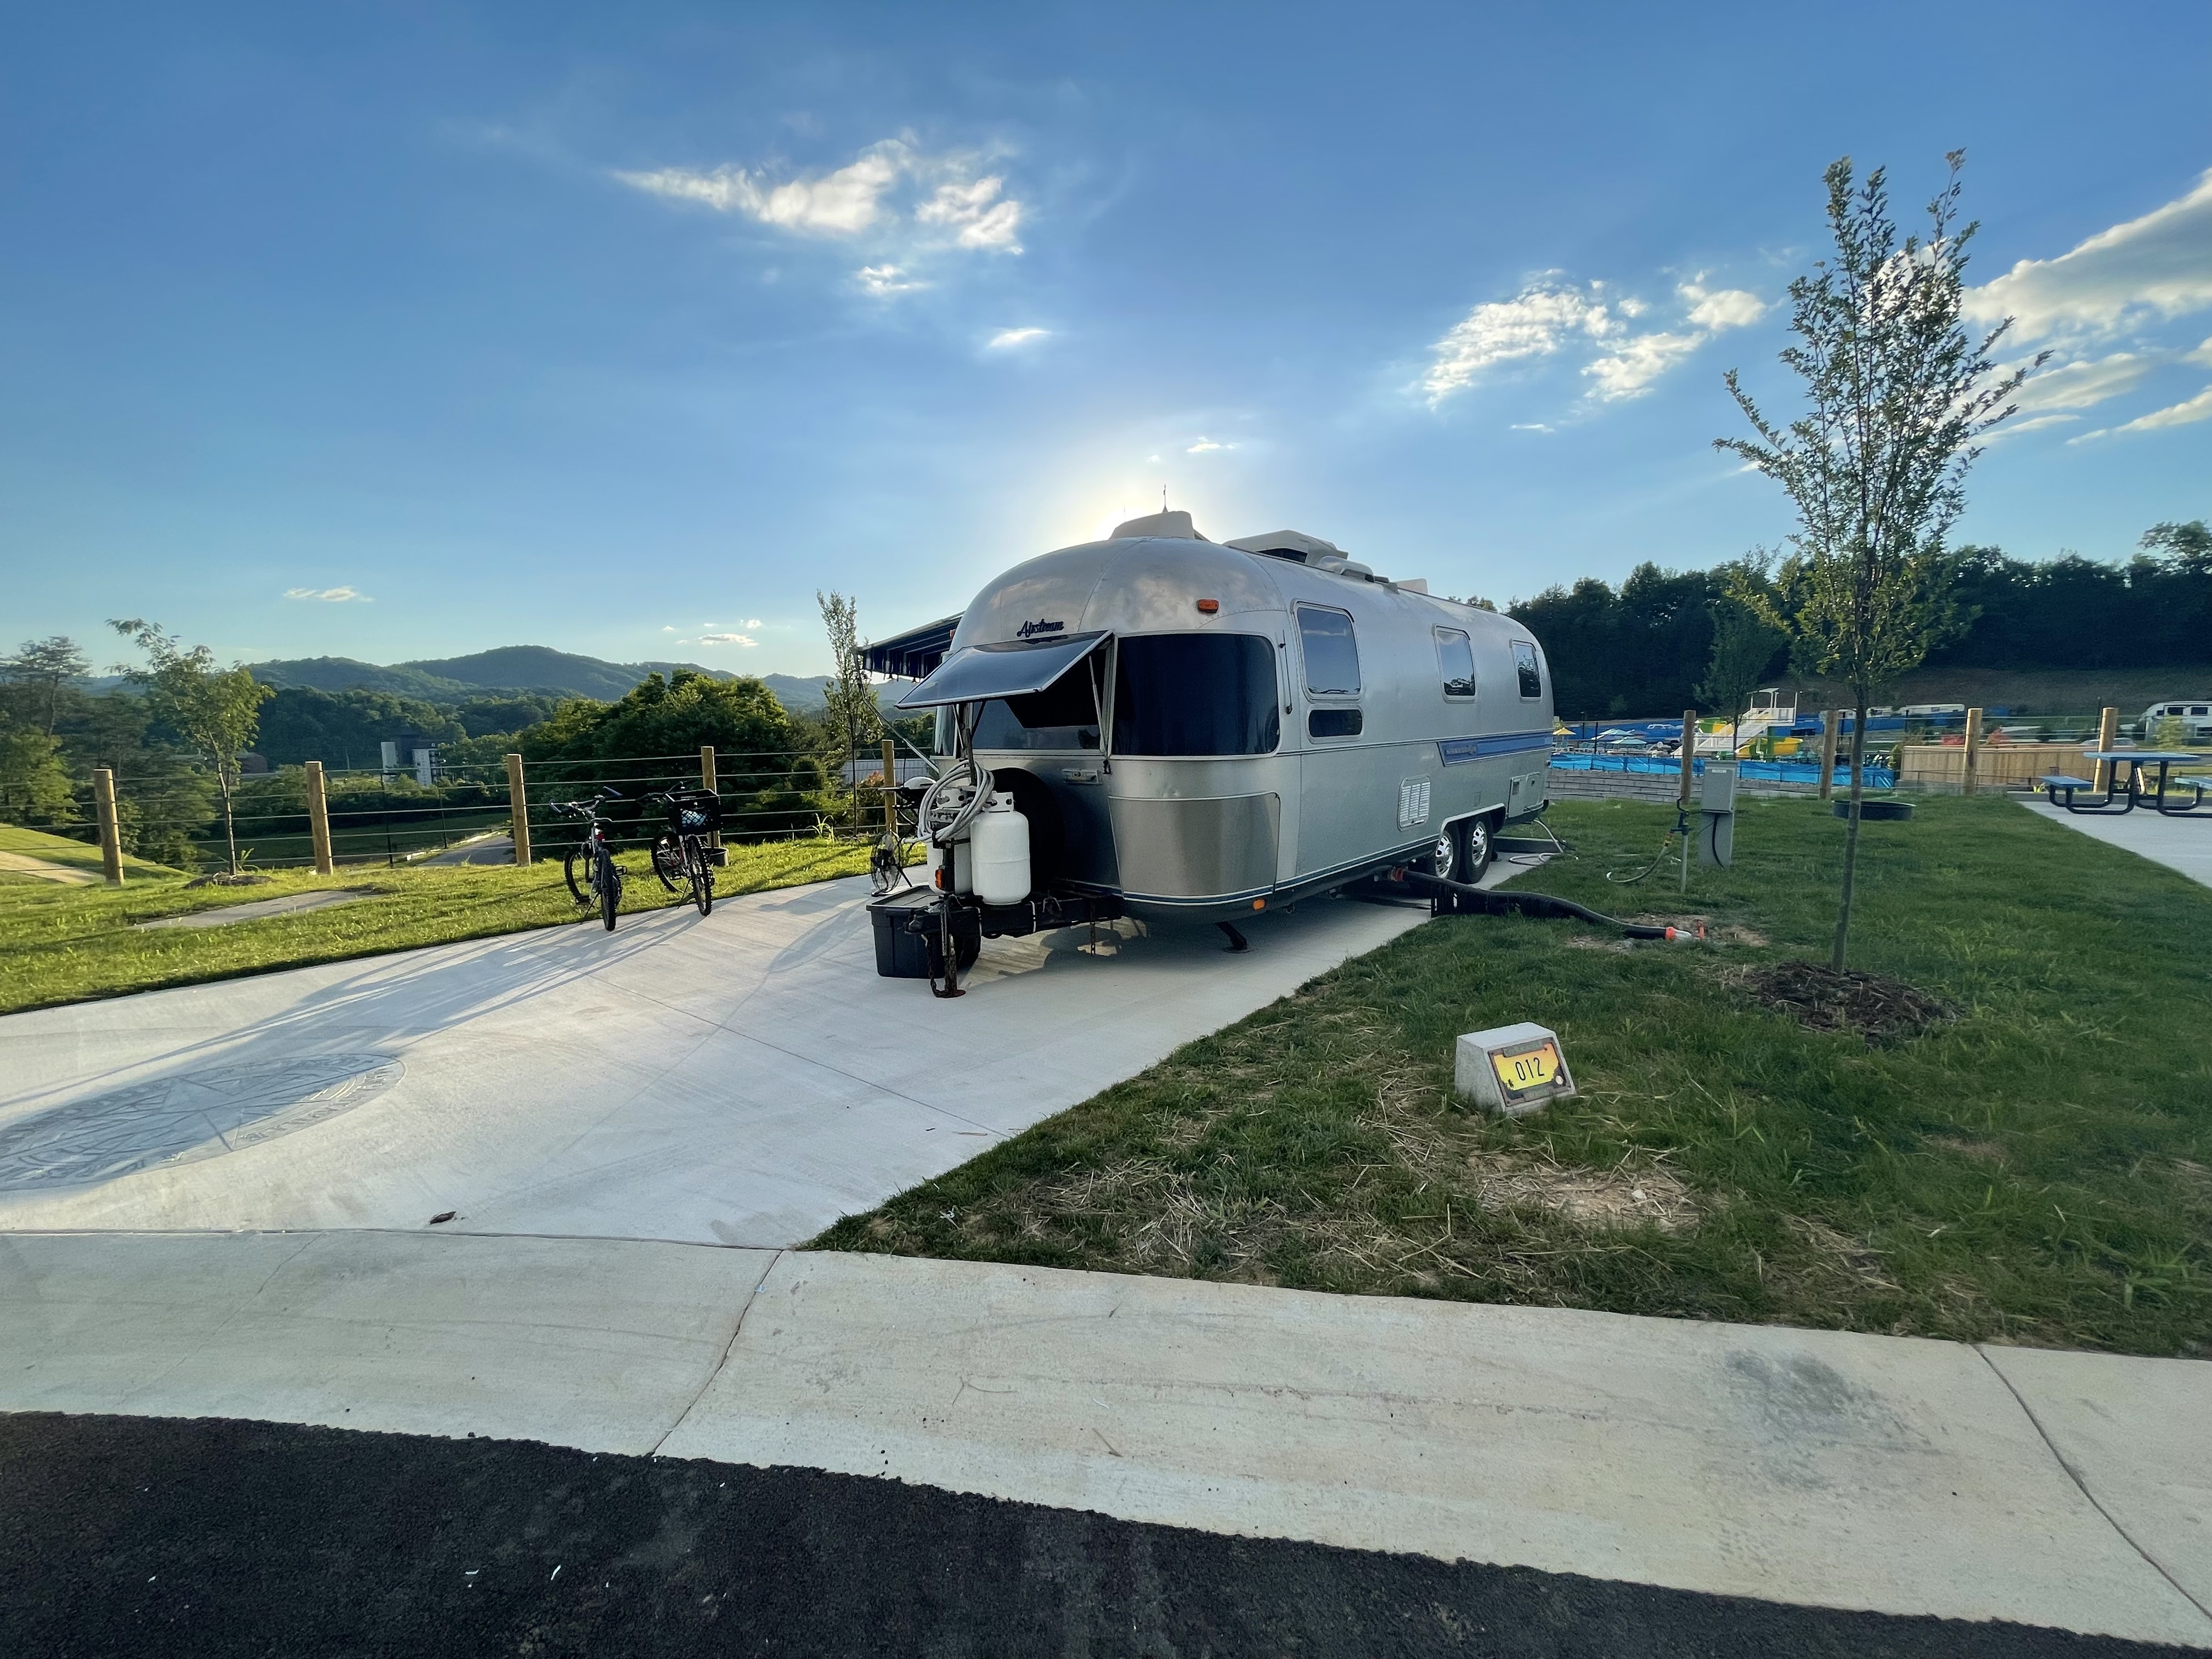 Camp Margaritaville RV Resort & Lodge